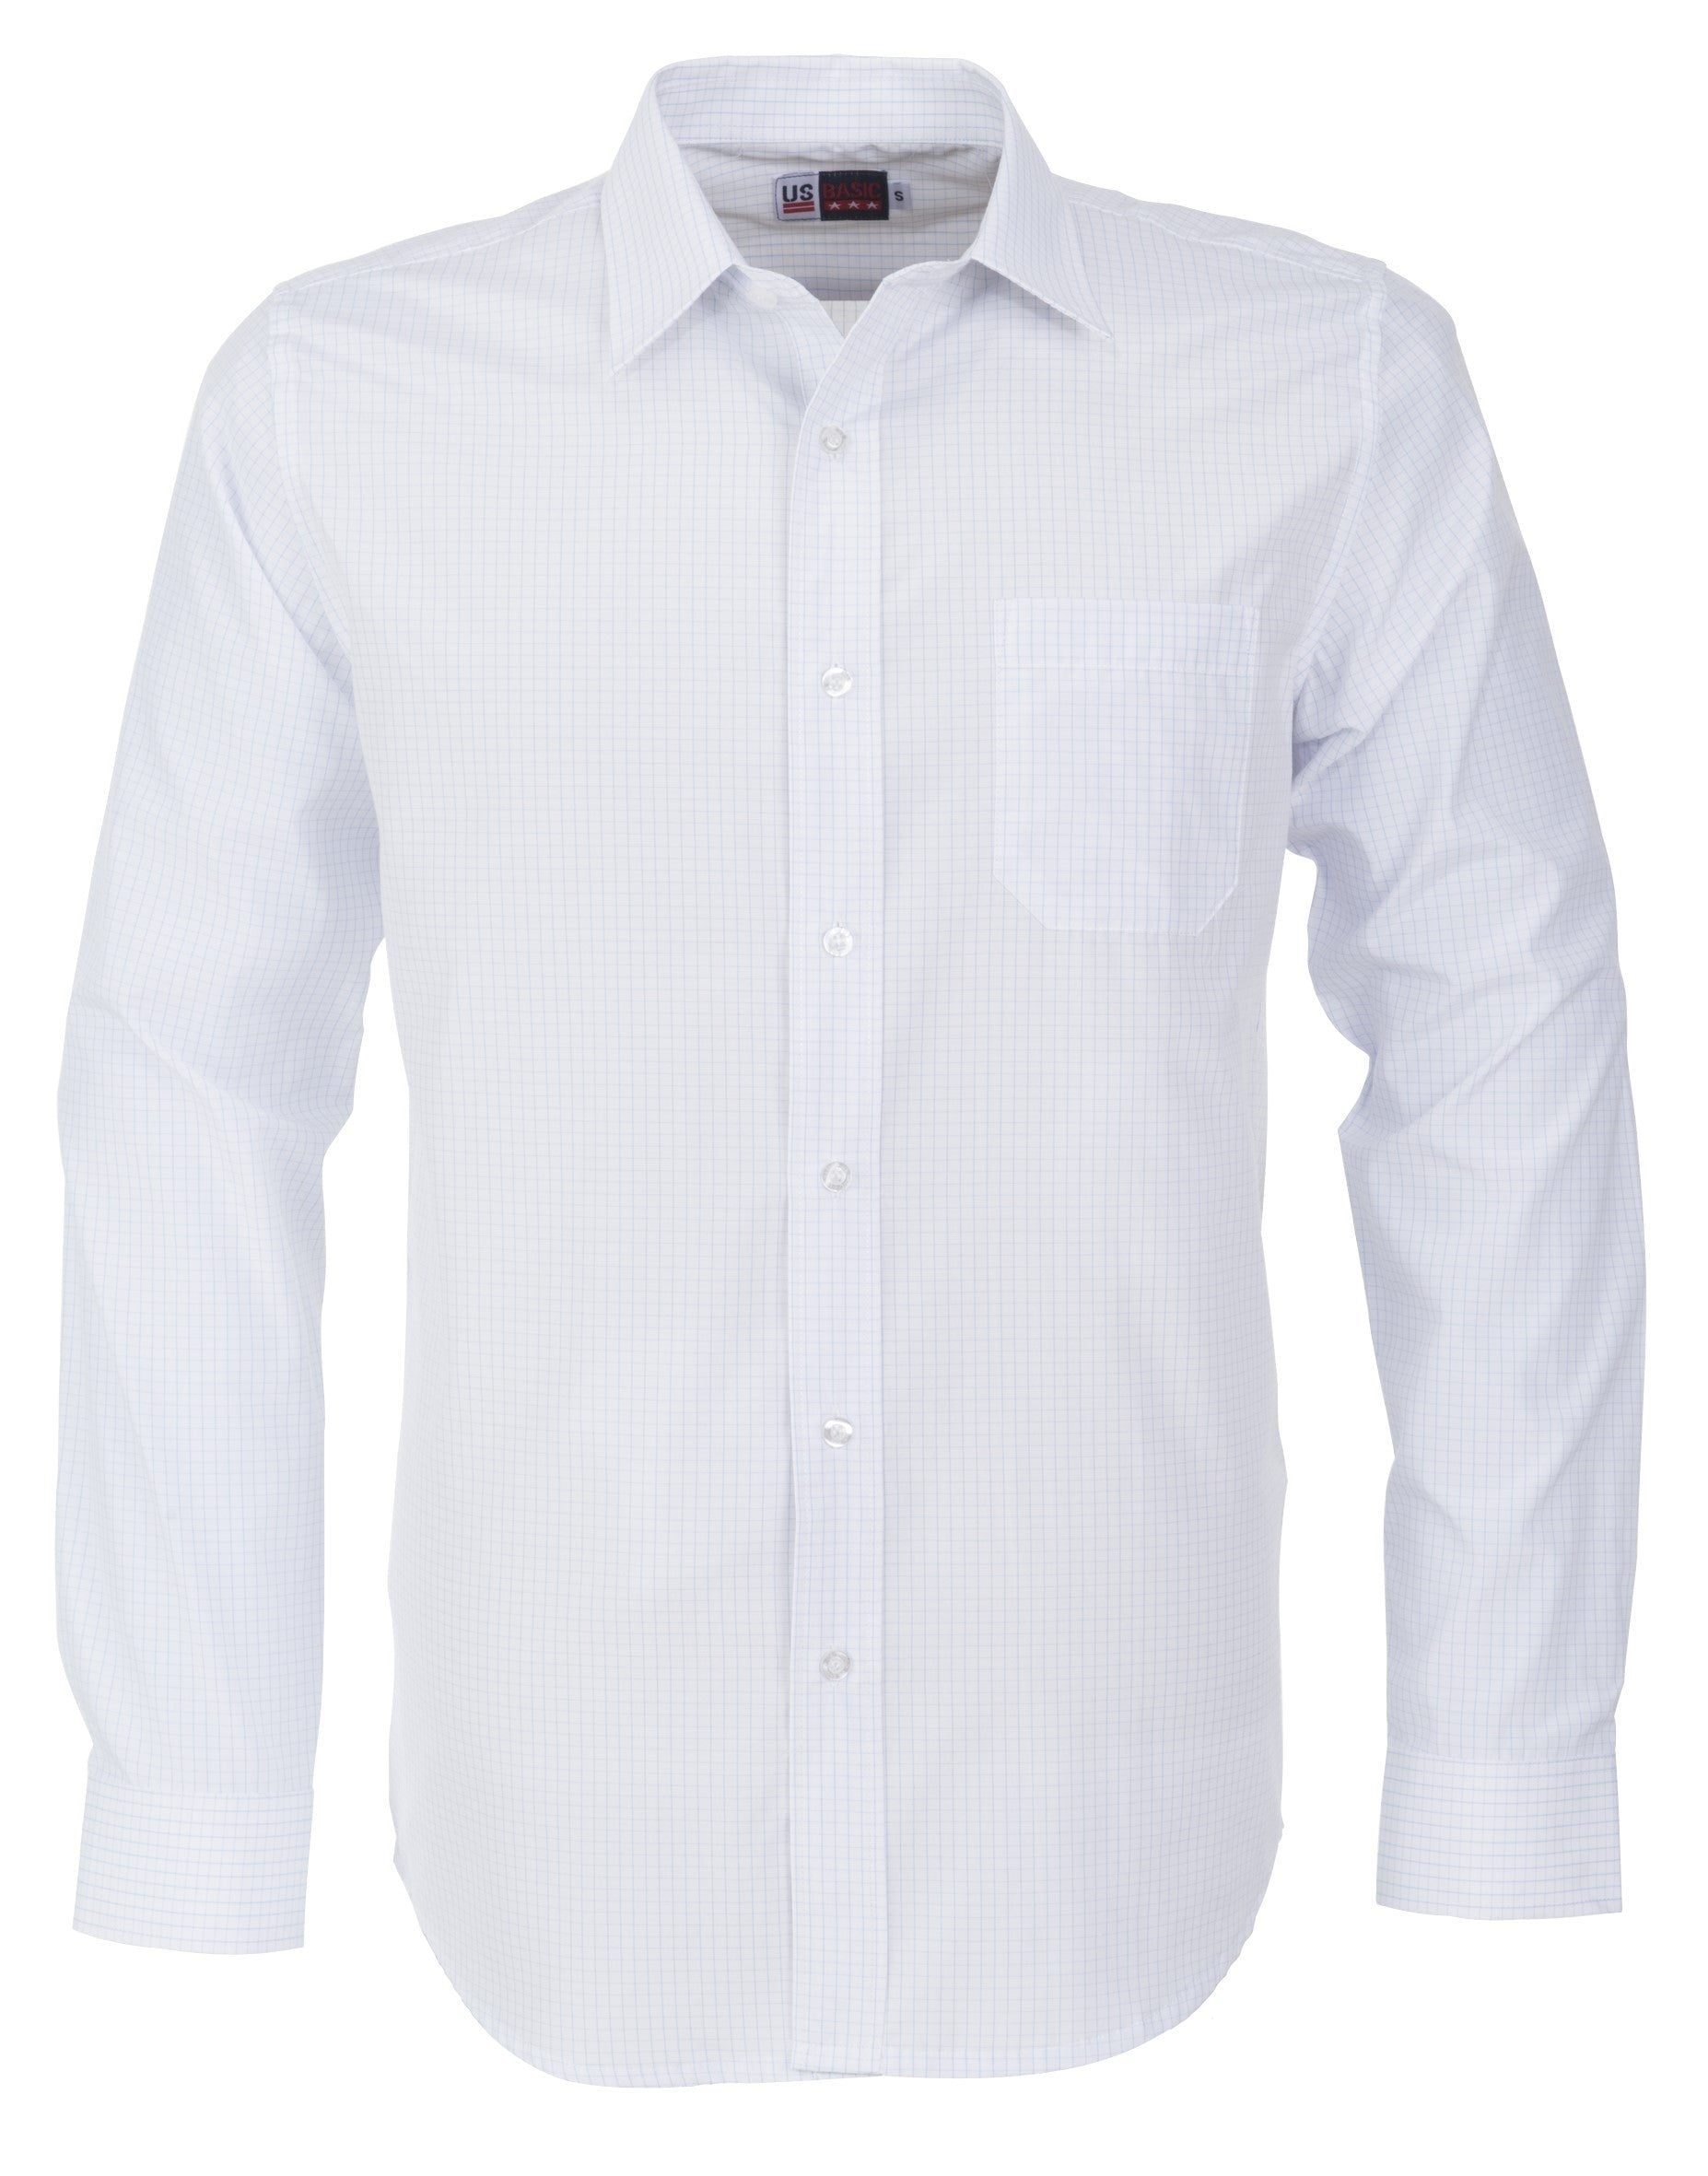 Mens Long Sleeve Huntington Shirt - Black Only-2XL-White With Light Blue-WLB